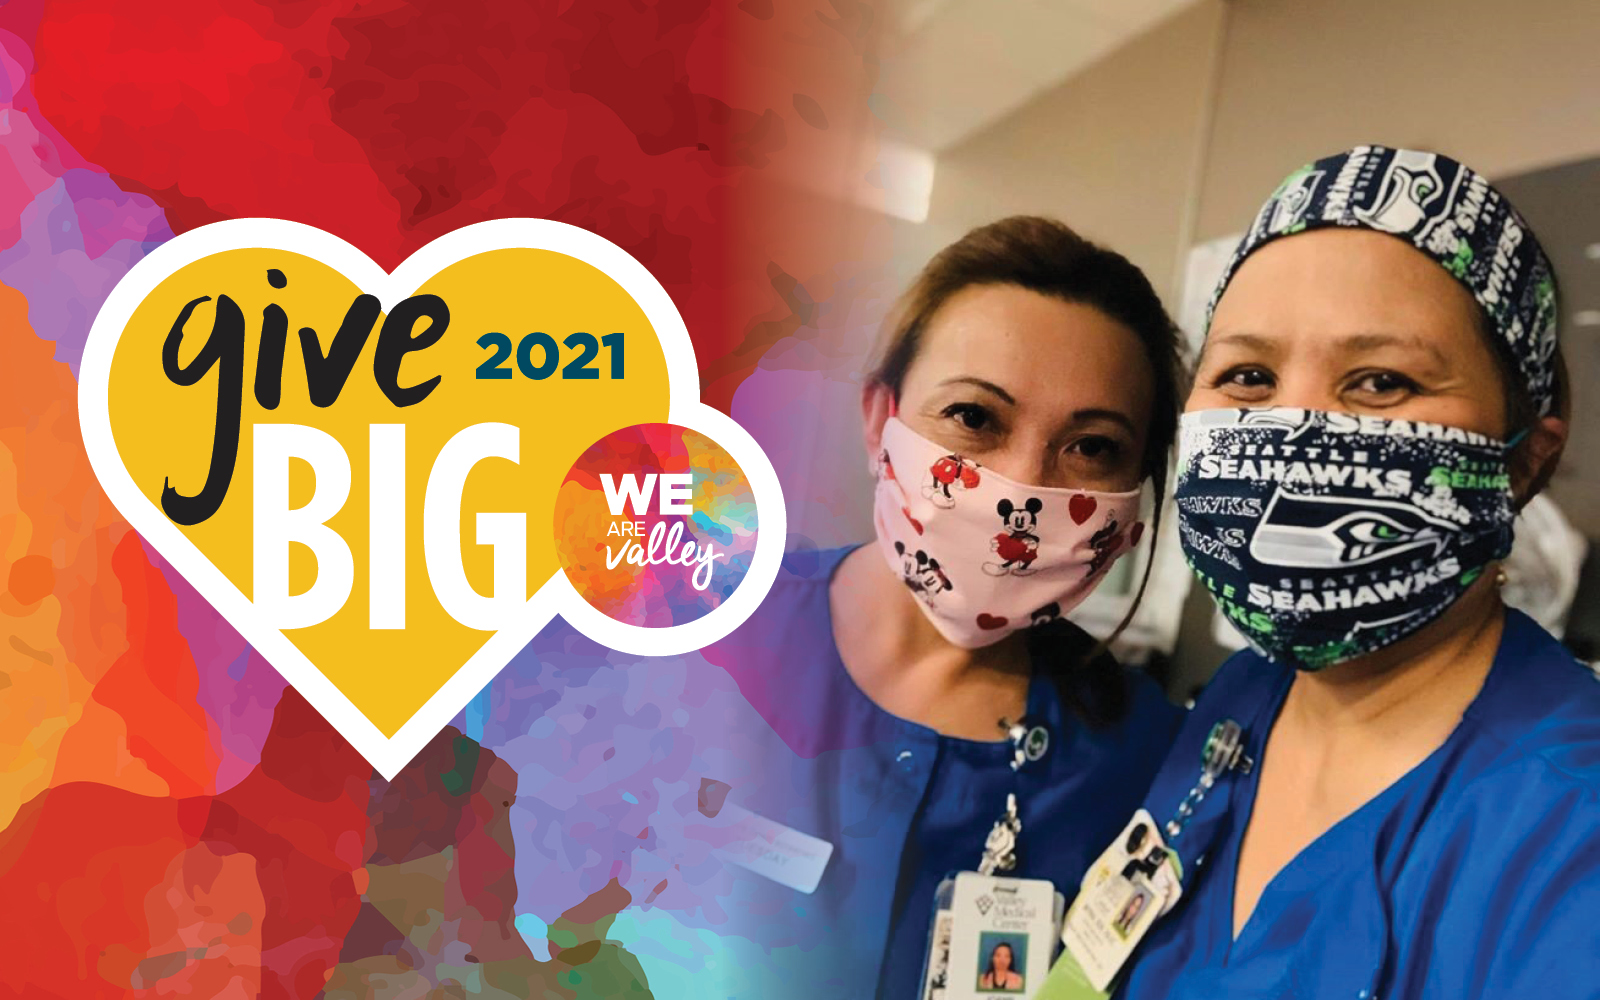 GiveBIG 2021: Make a BIG Impact